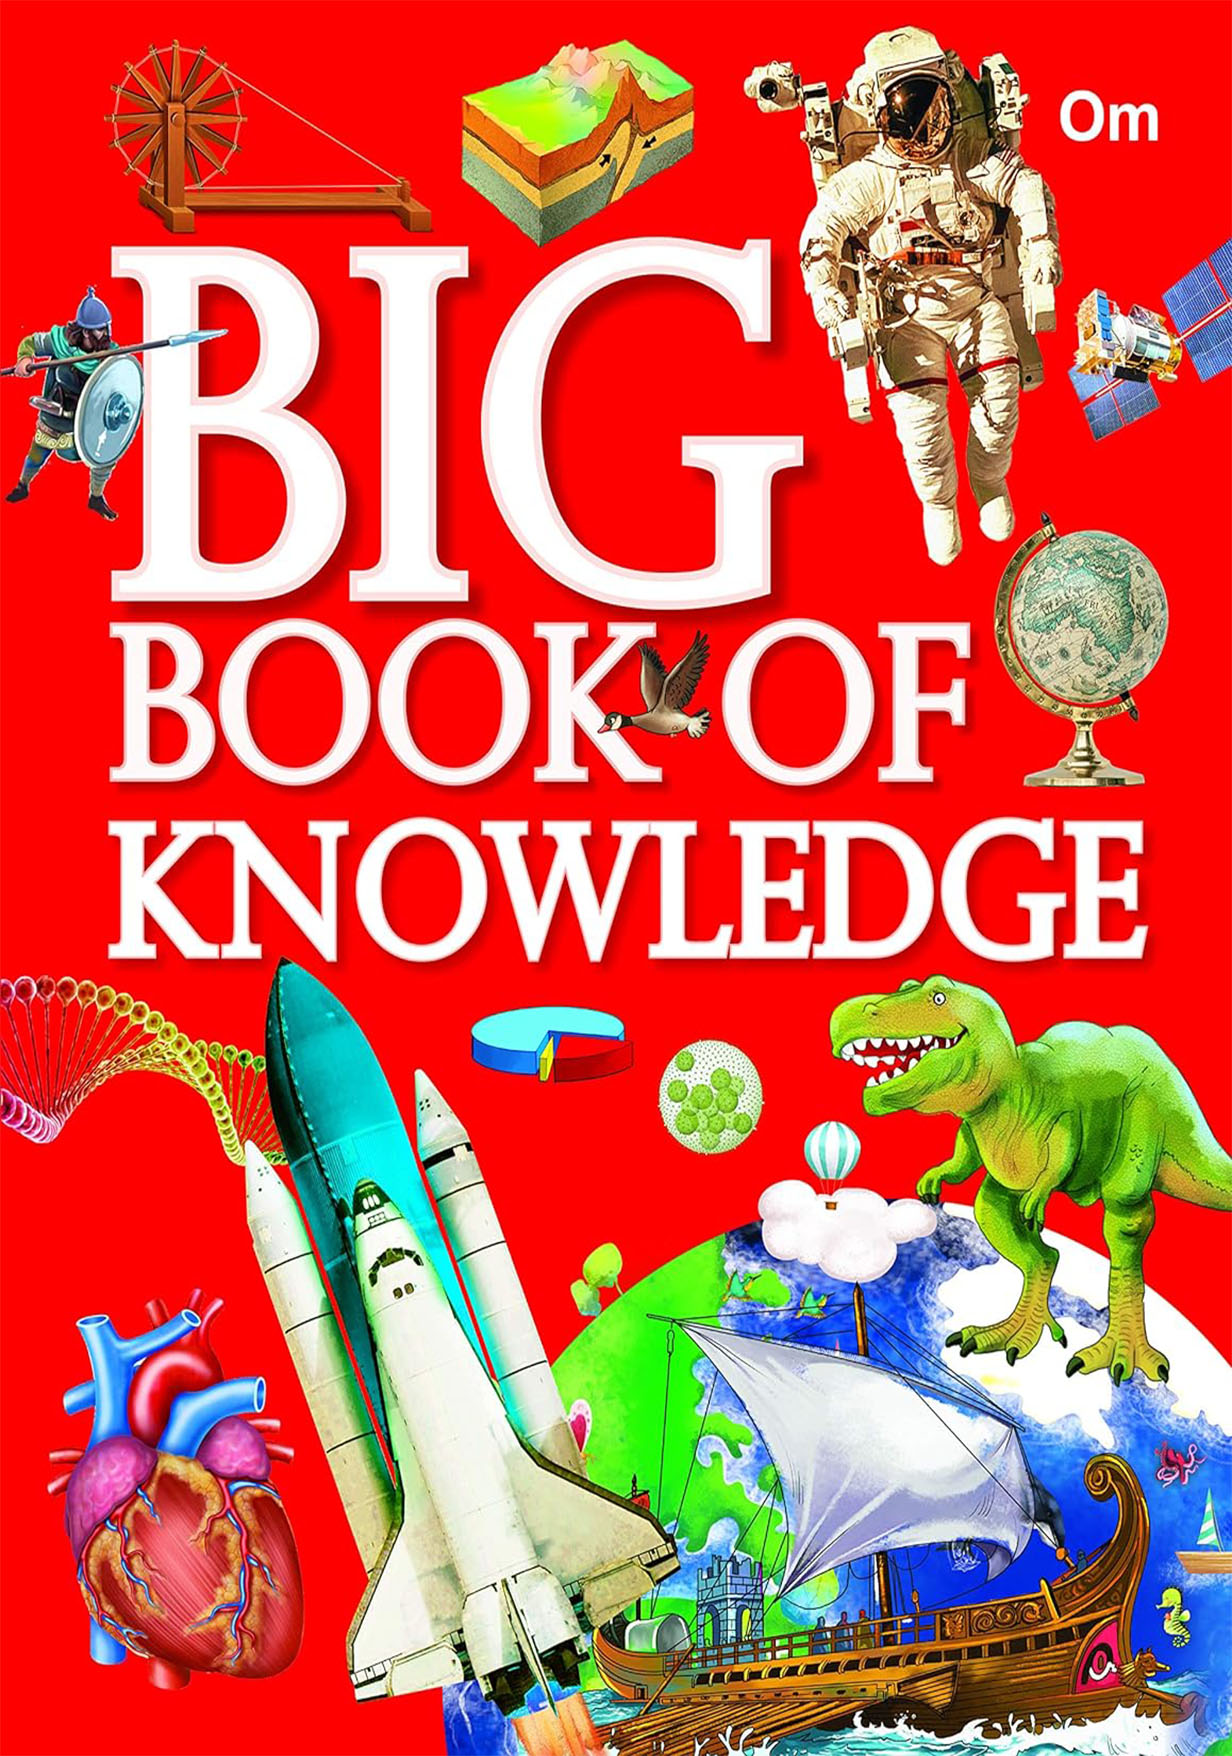 Big Book of Knowledge (হার্ডকভার)